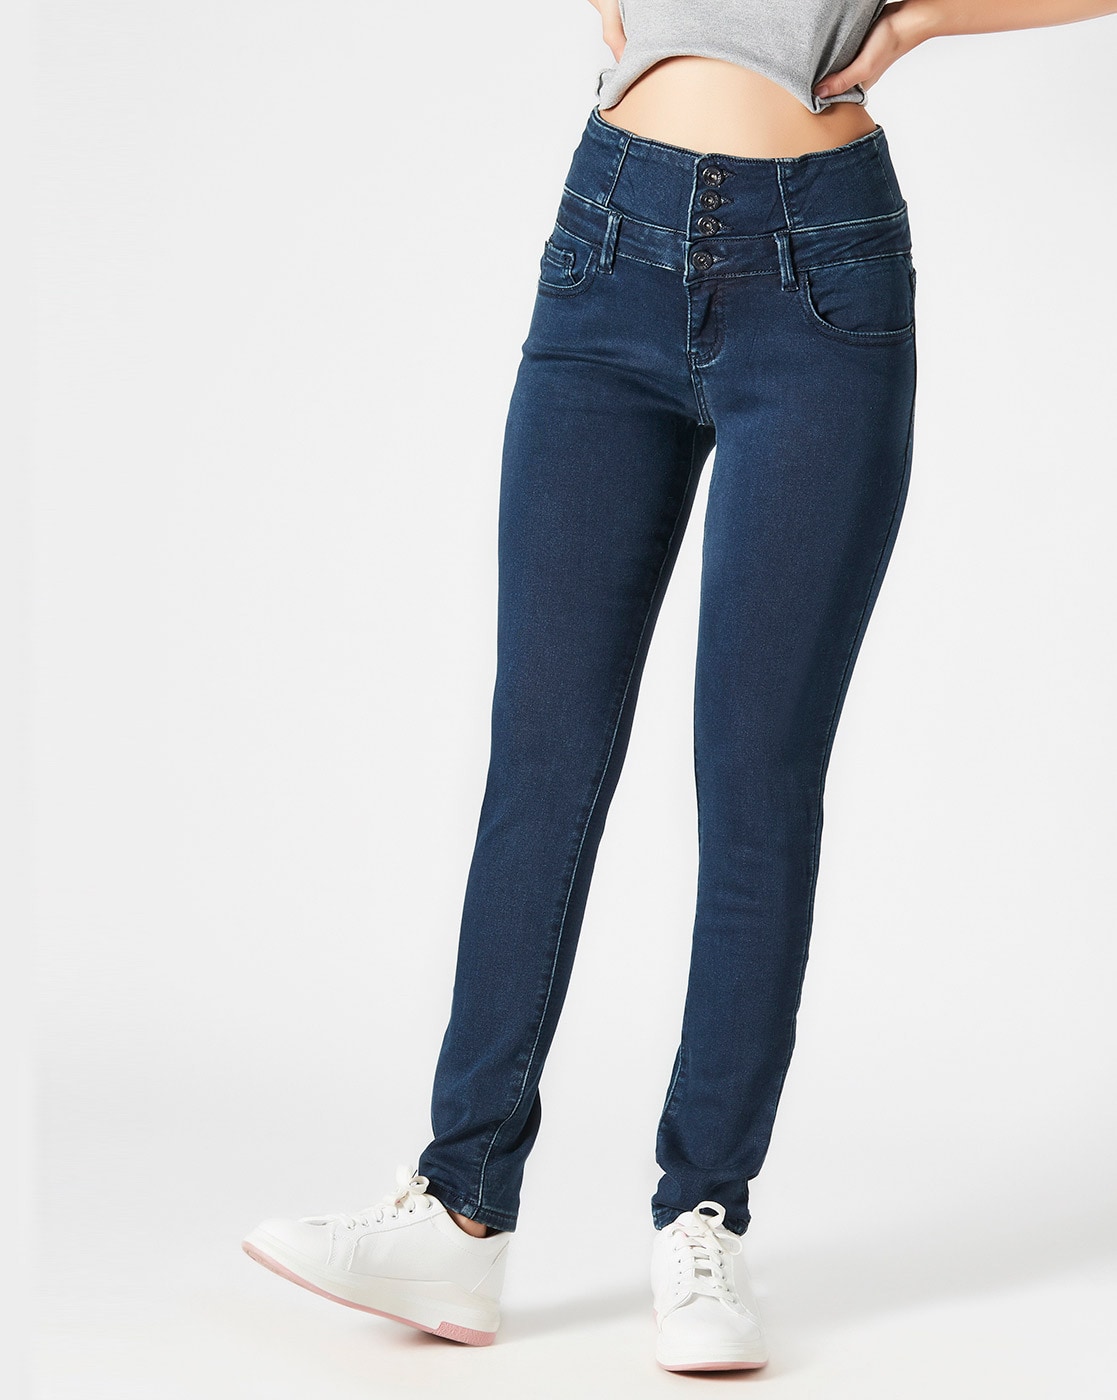 deal jeans online